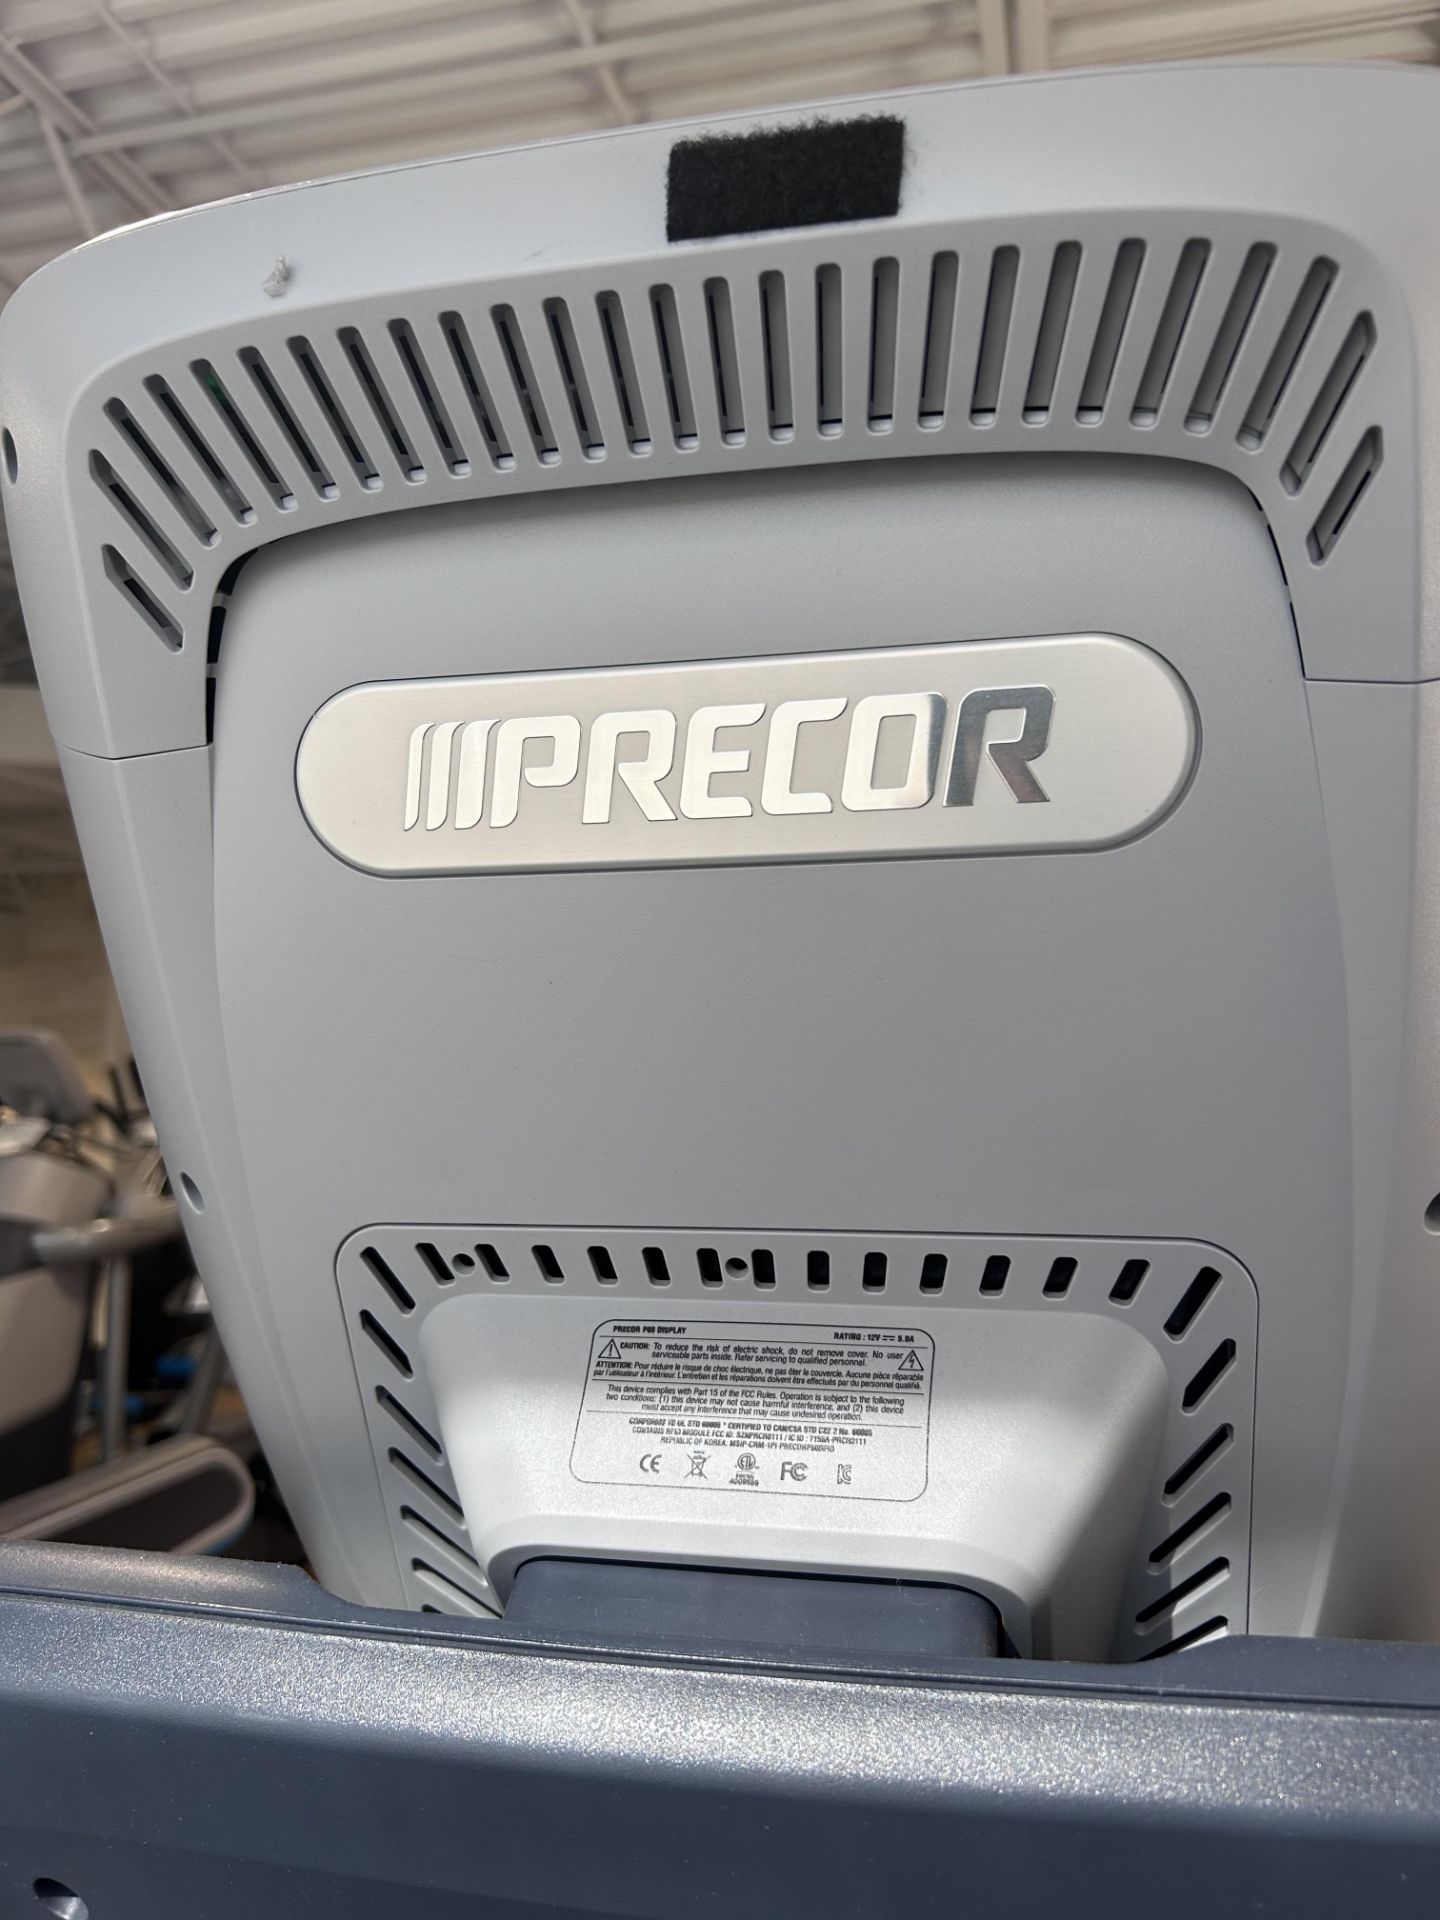 PRECOR mod. TRM 811 Treadmill with PRECOR P80 Display Console, ser. AGNBJ20150043 - Image 3 of 4